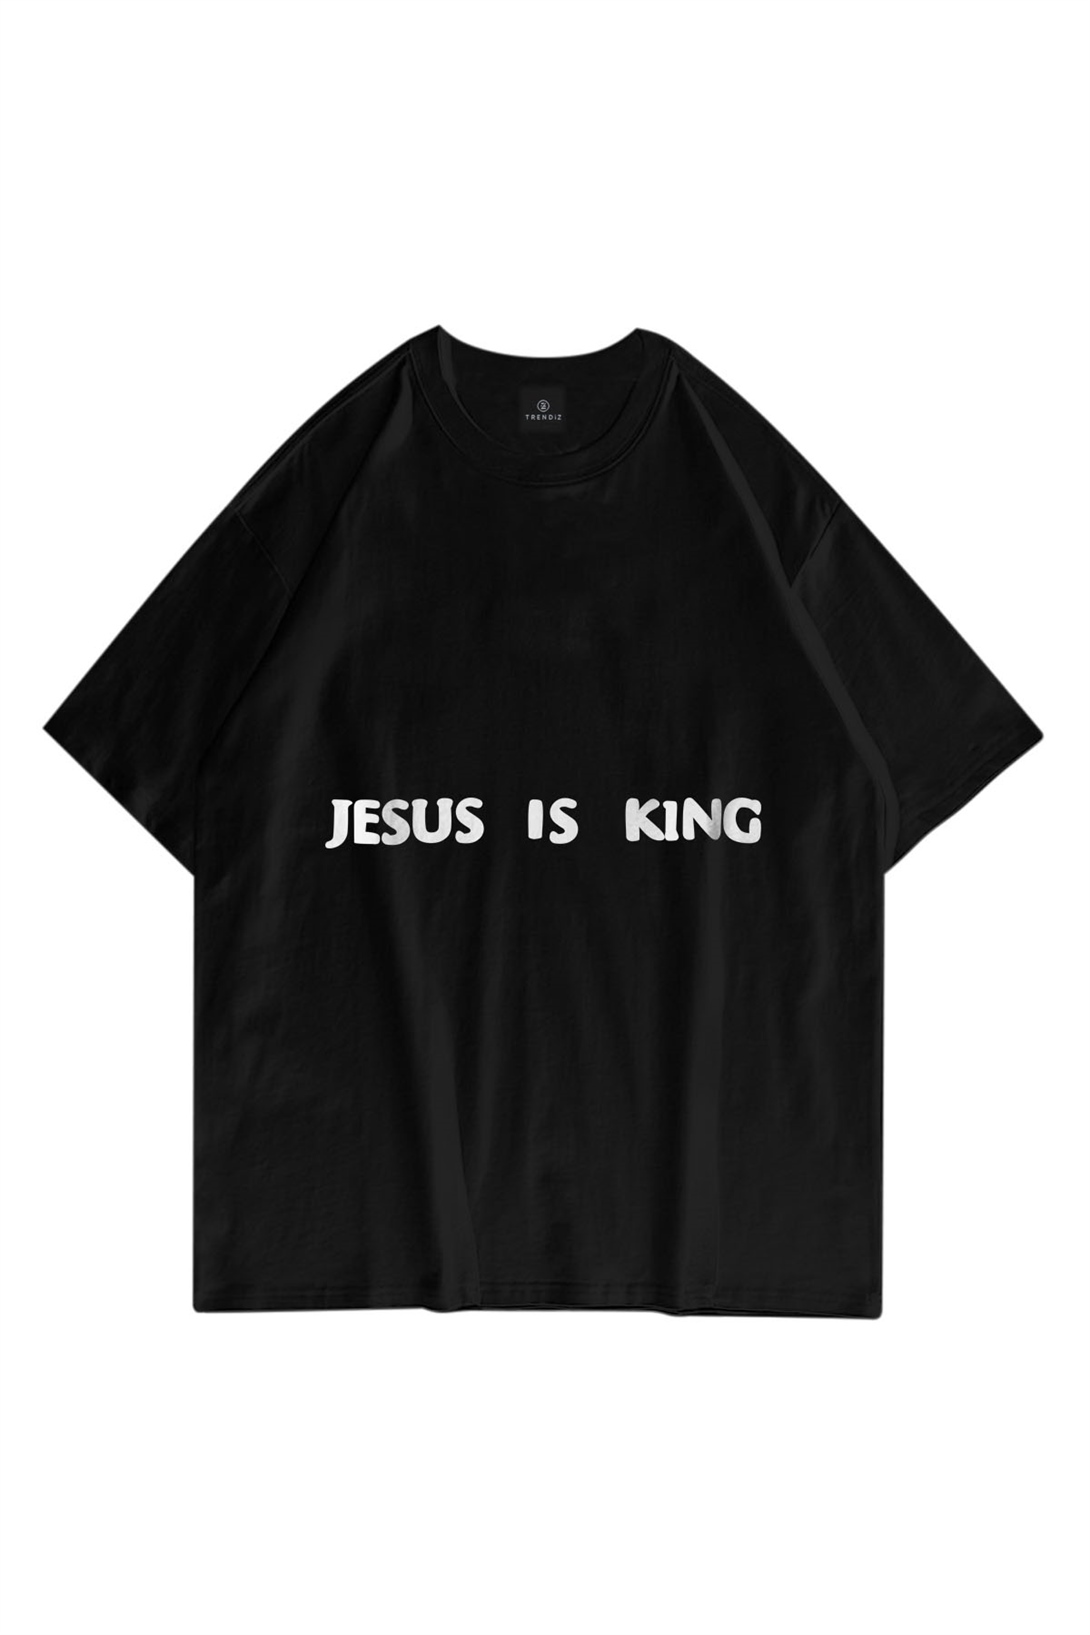 Trendiz Unisex Jesus is King Siyah Tshirt